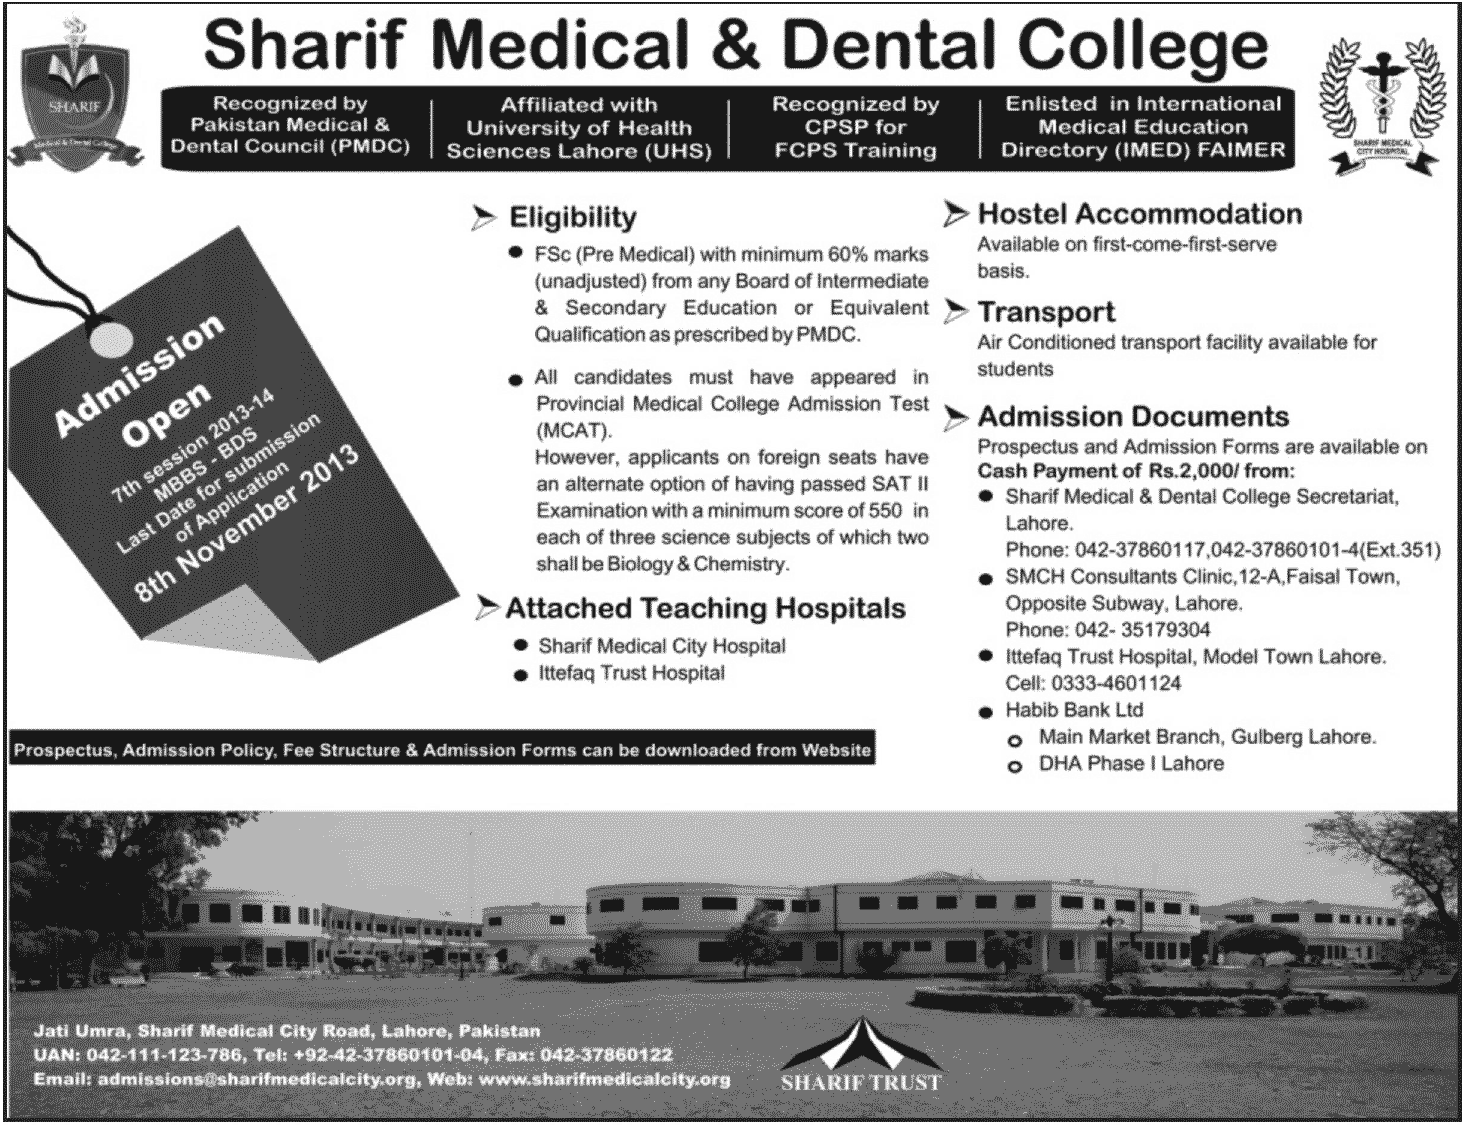 Sharif Medical & Dental College Lahore Admission Notice 2013 for MBBS & BDS